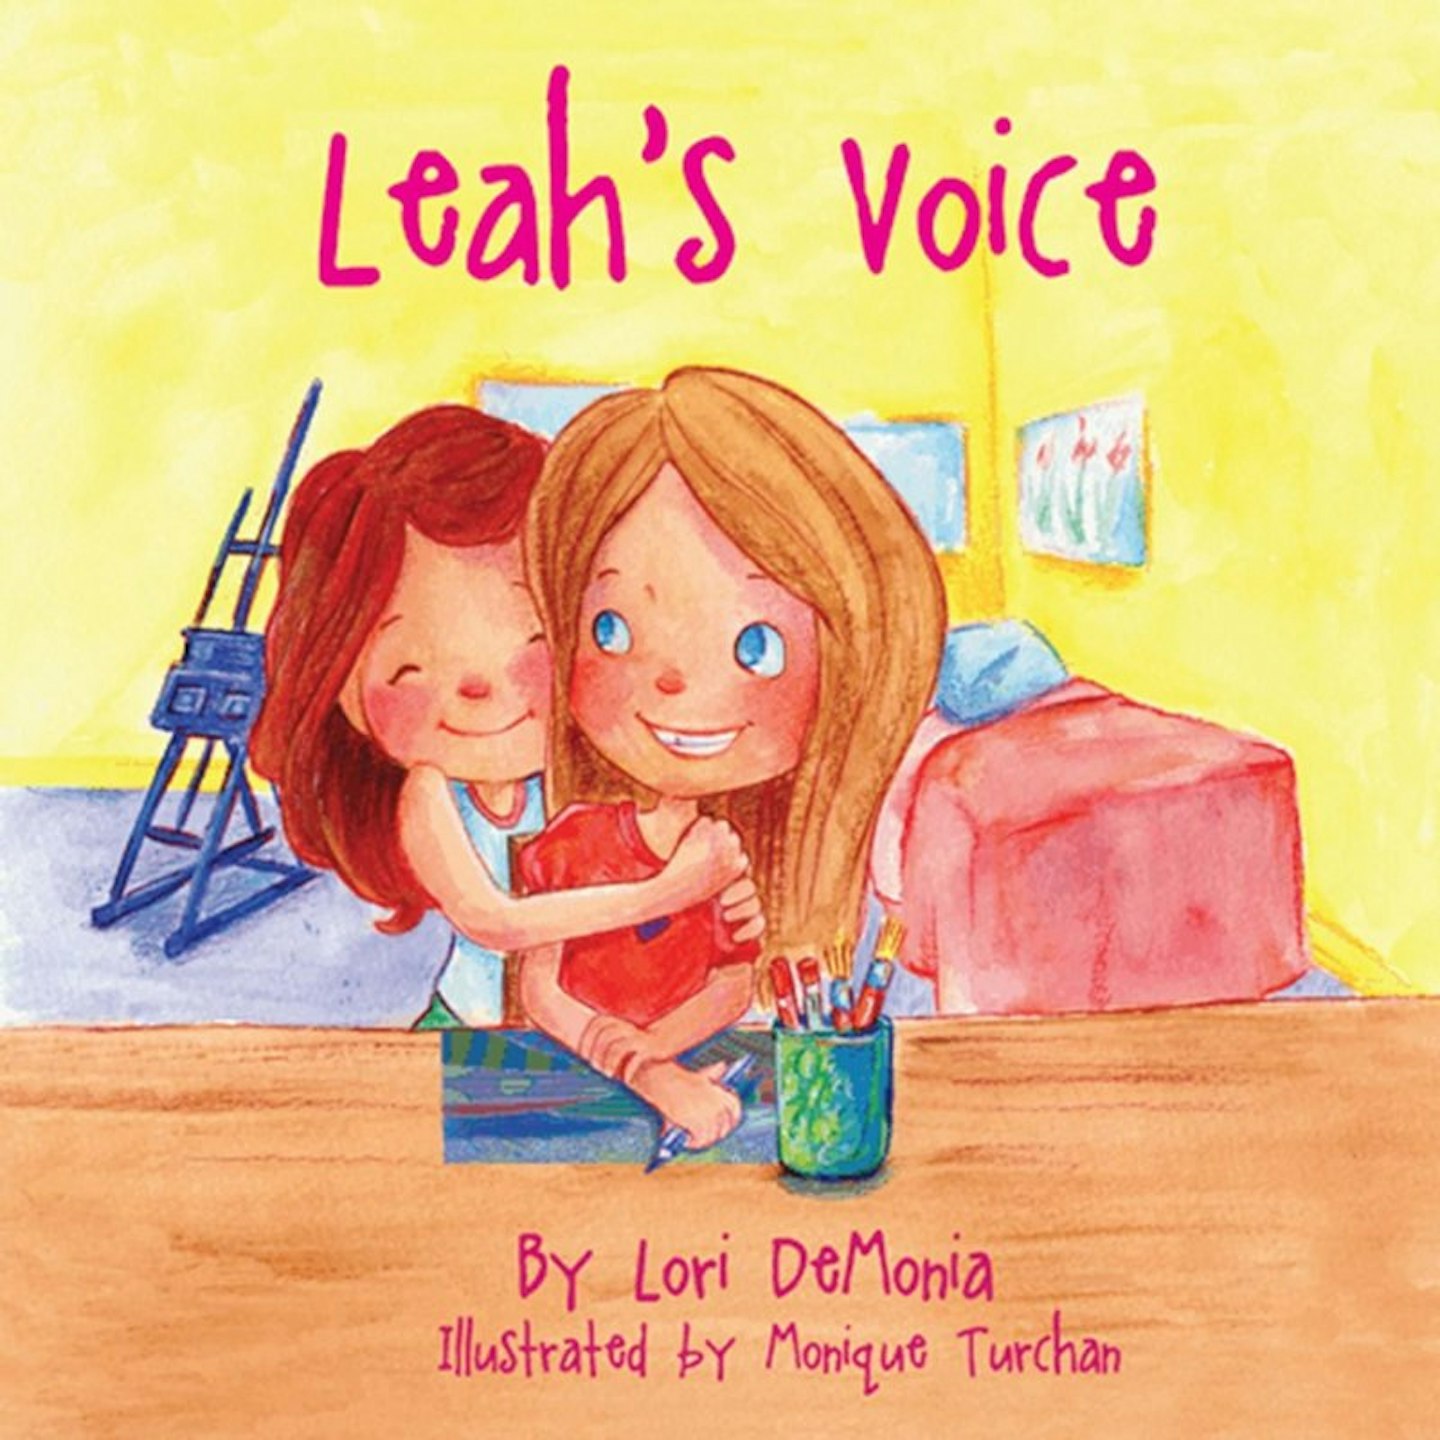 leahs-voice-books-with-autism.jpeg